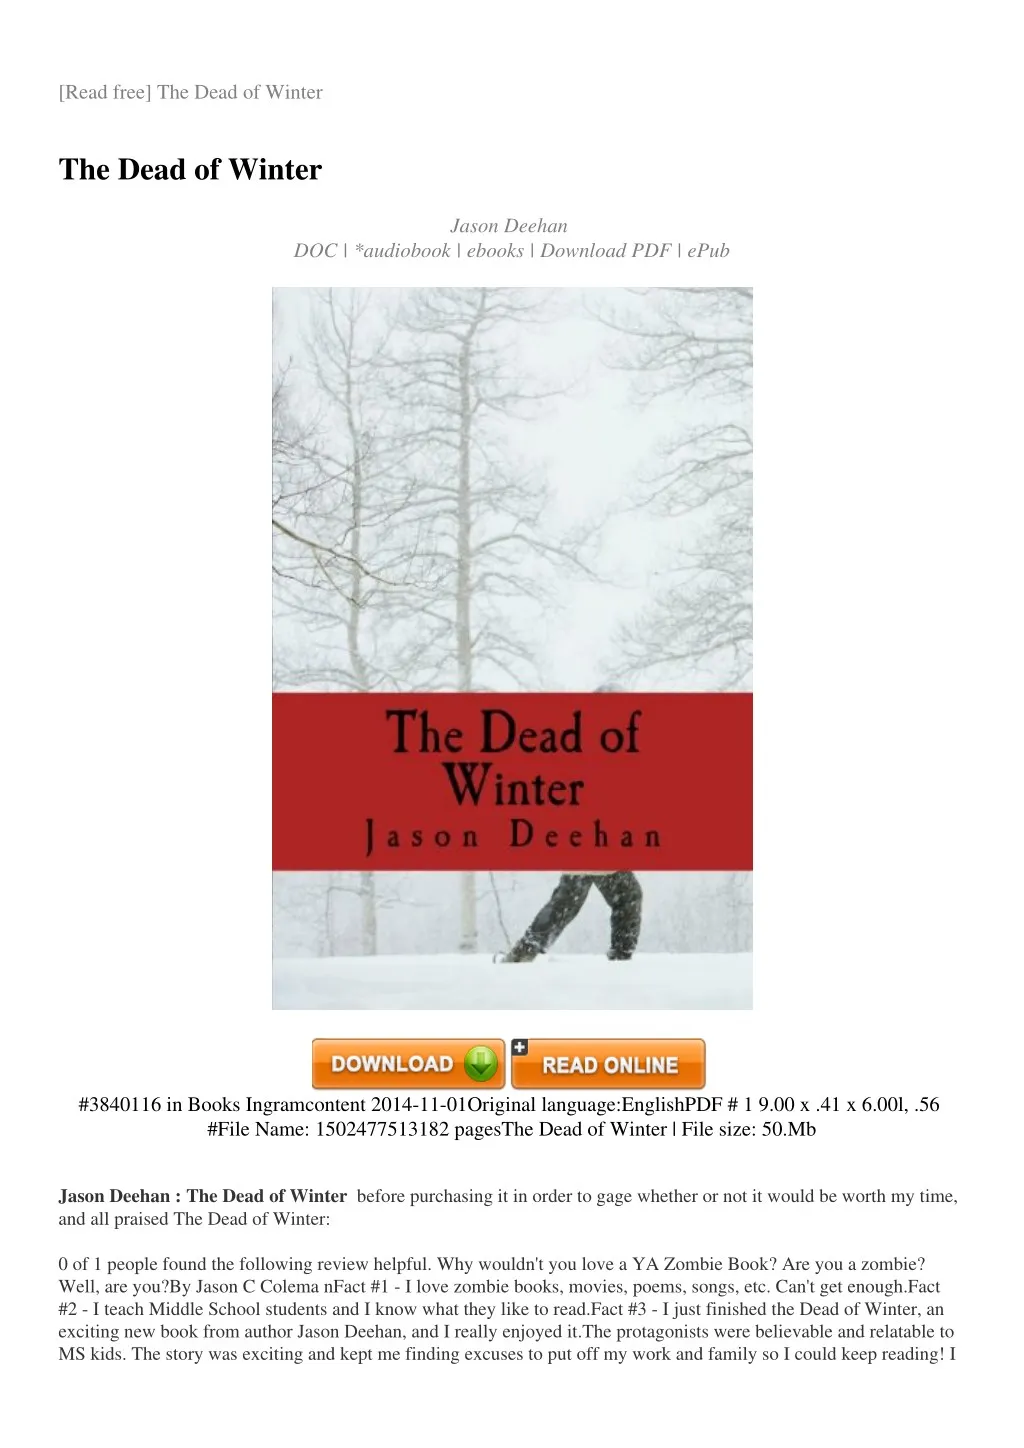 read free the dead of winter